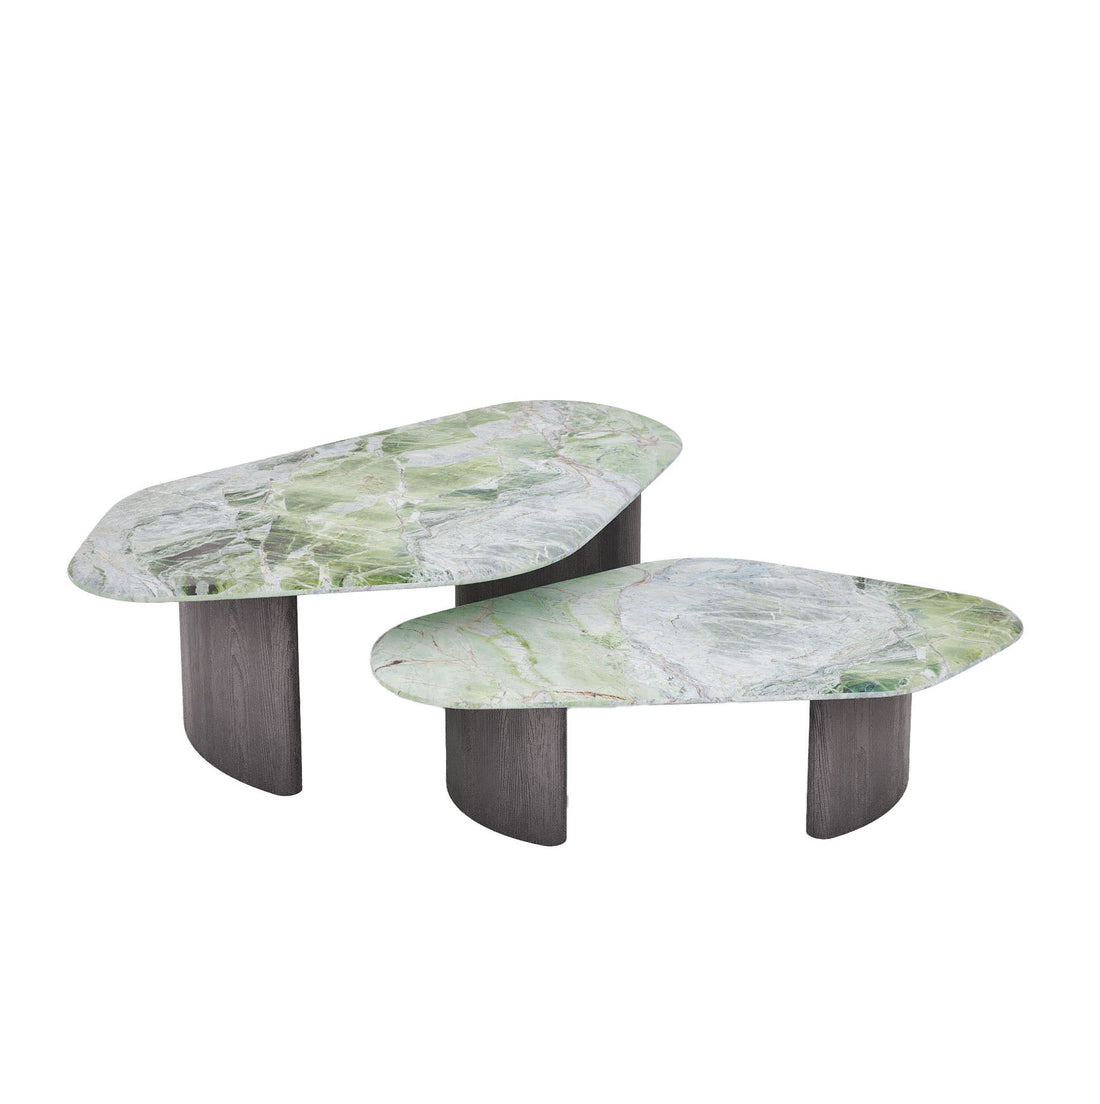 Triangular Marble Coffee Table, Set of 2, Curvy Fior di Pesco Blue Mare Green Abbey